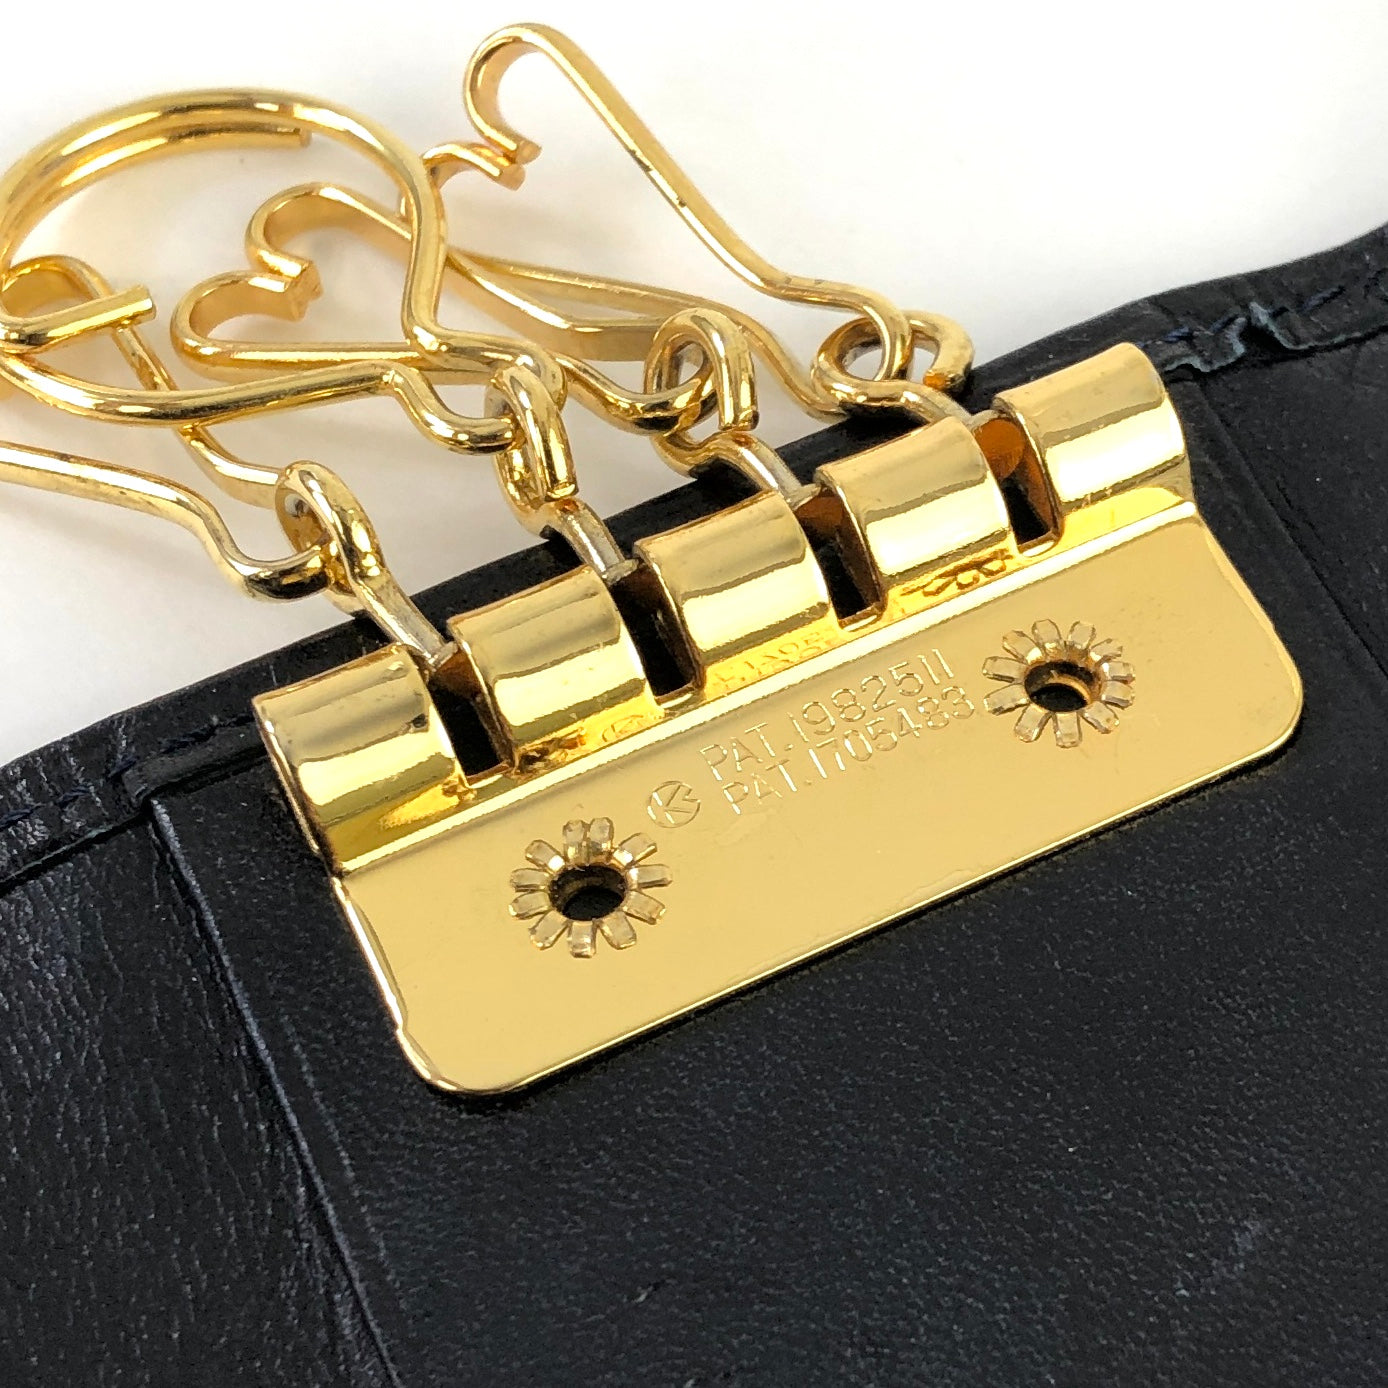 Yves Saint Laurent YSL motif leather key case dark navy w2js36 –  VintageShop solo